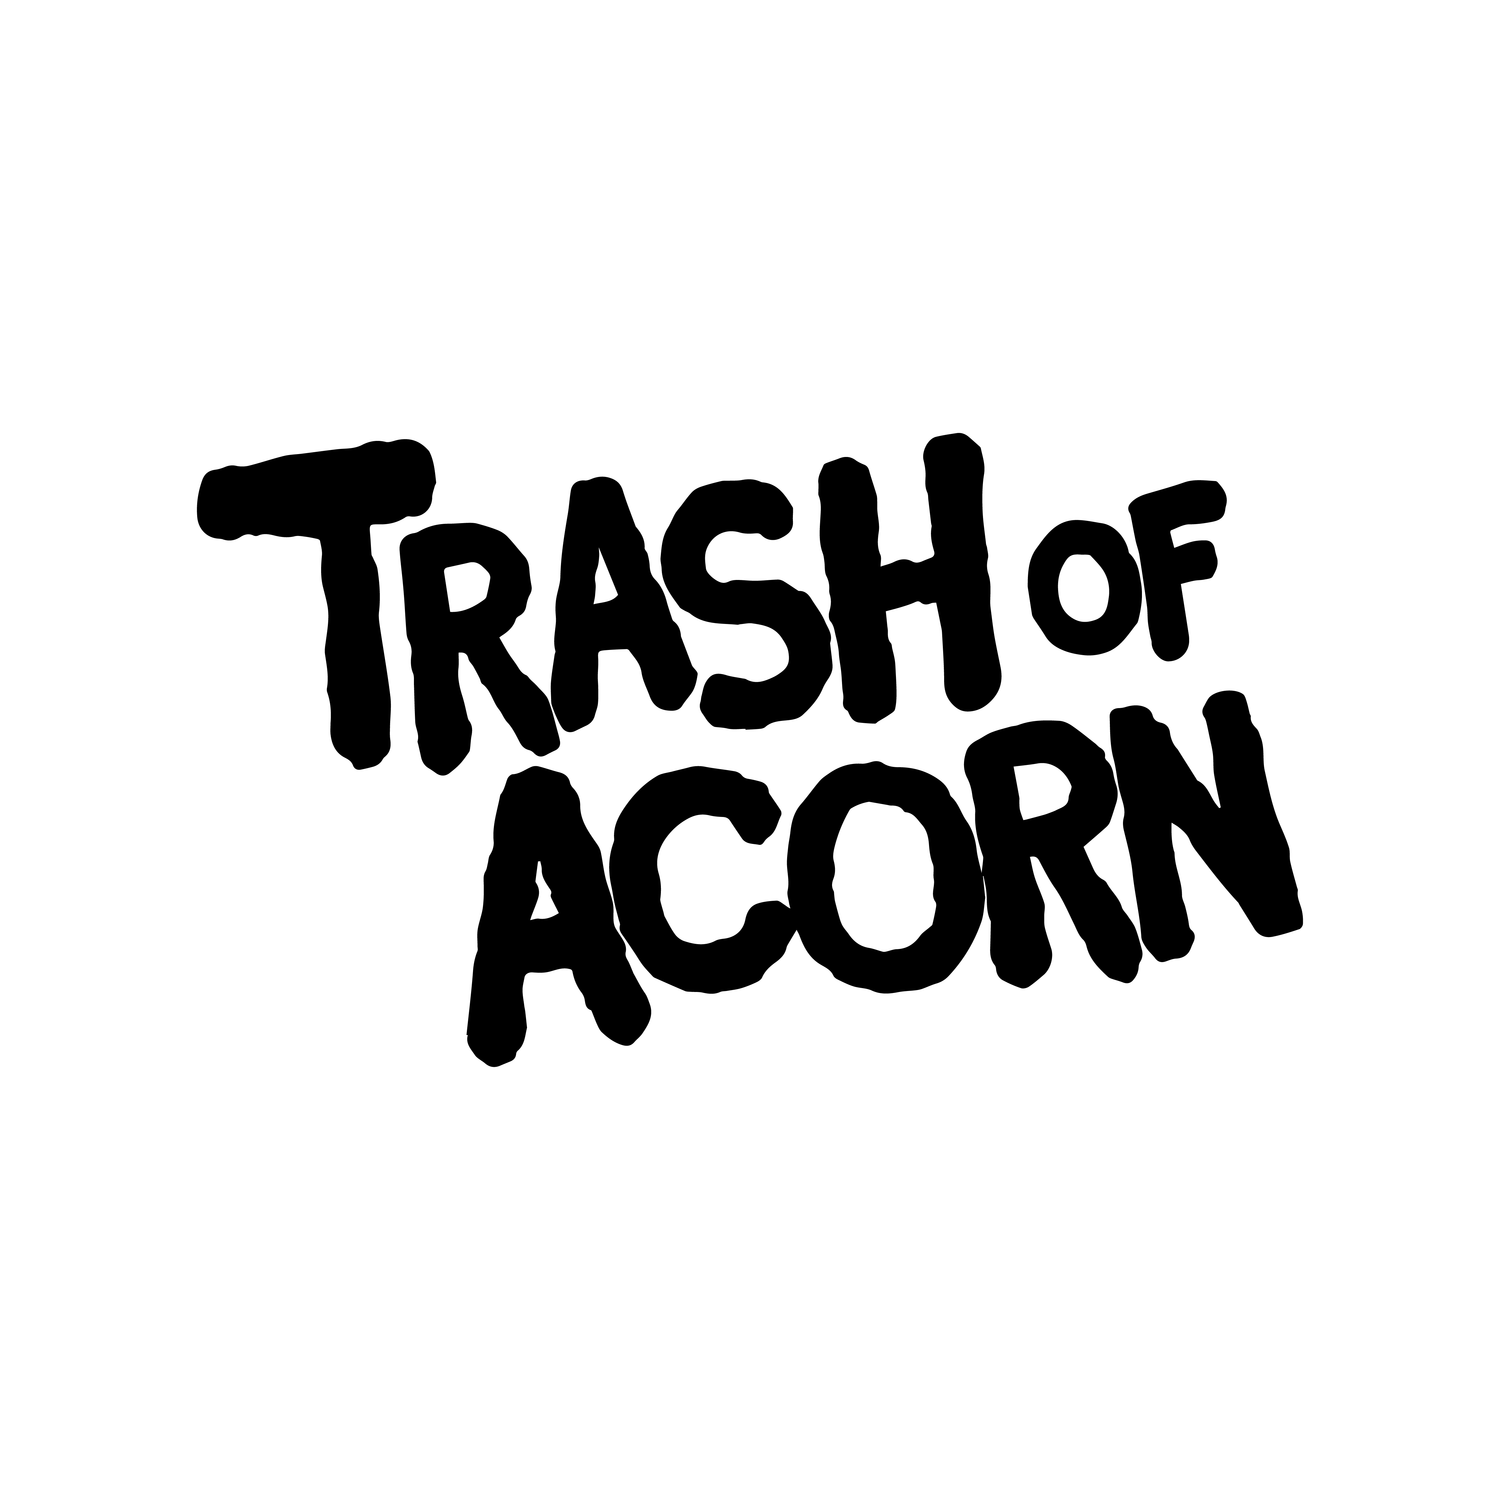 Trash of Acorn